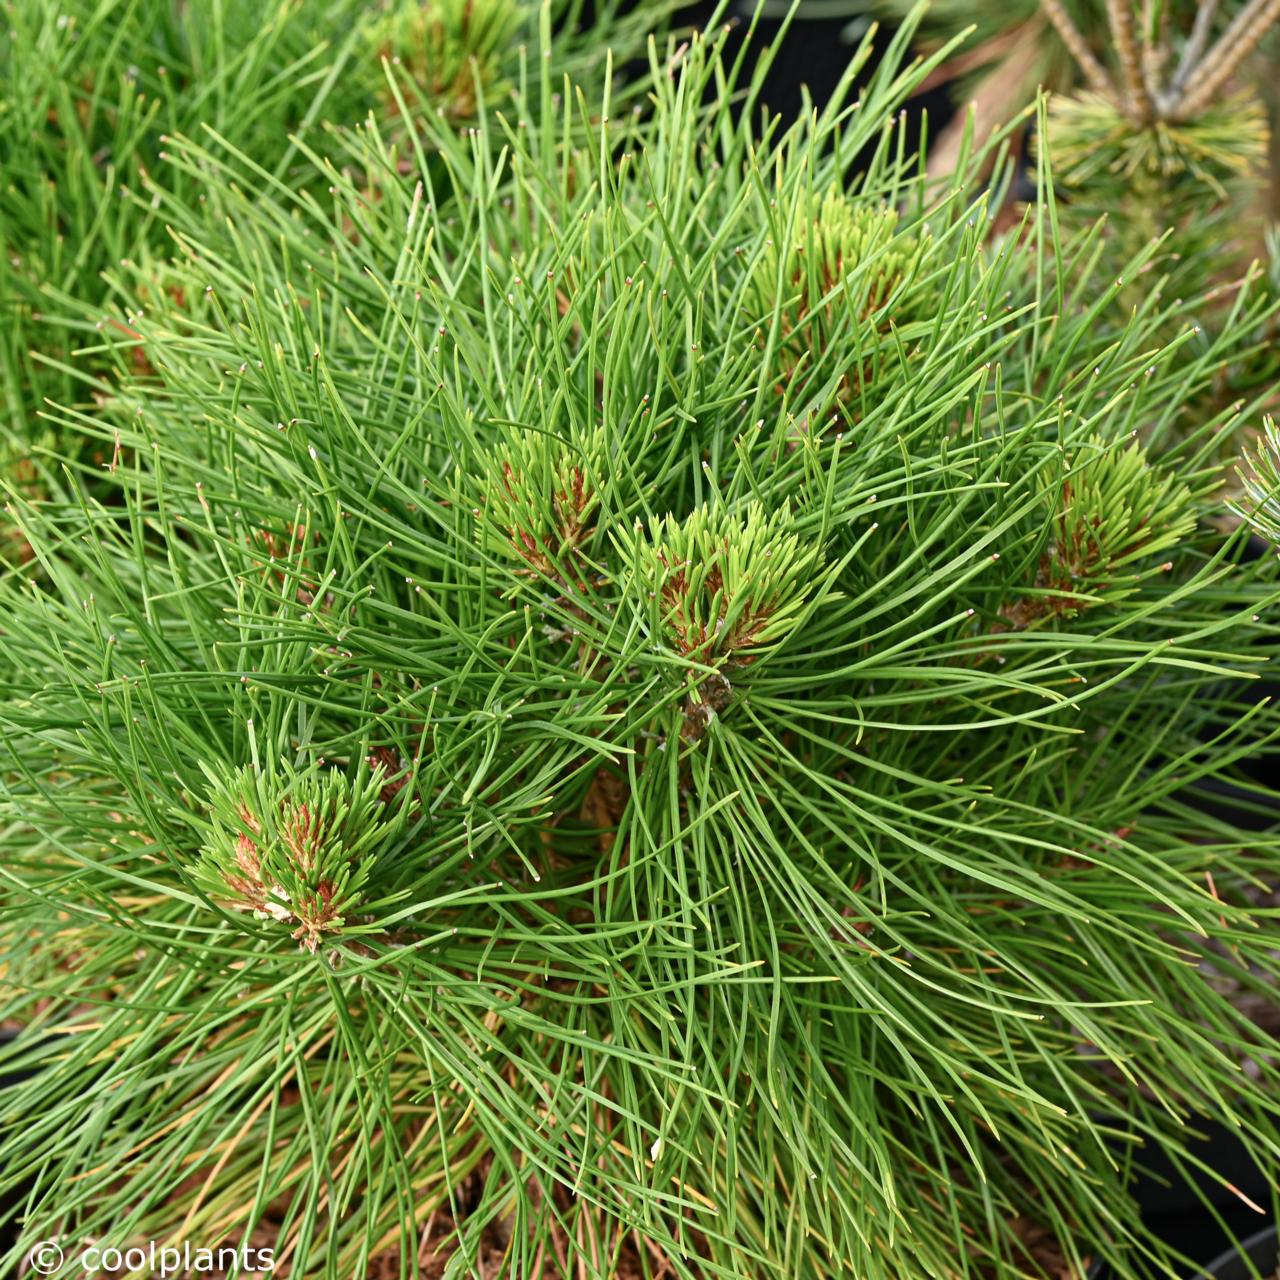 Pinus densiflora 'Kim' plant